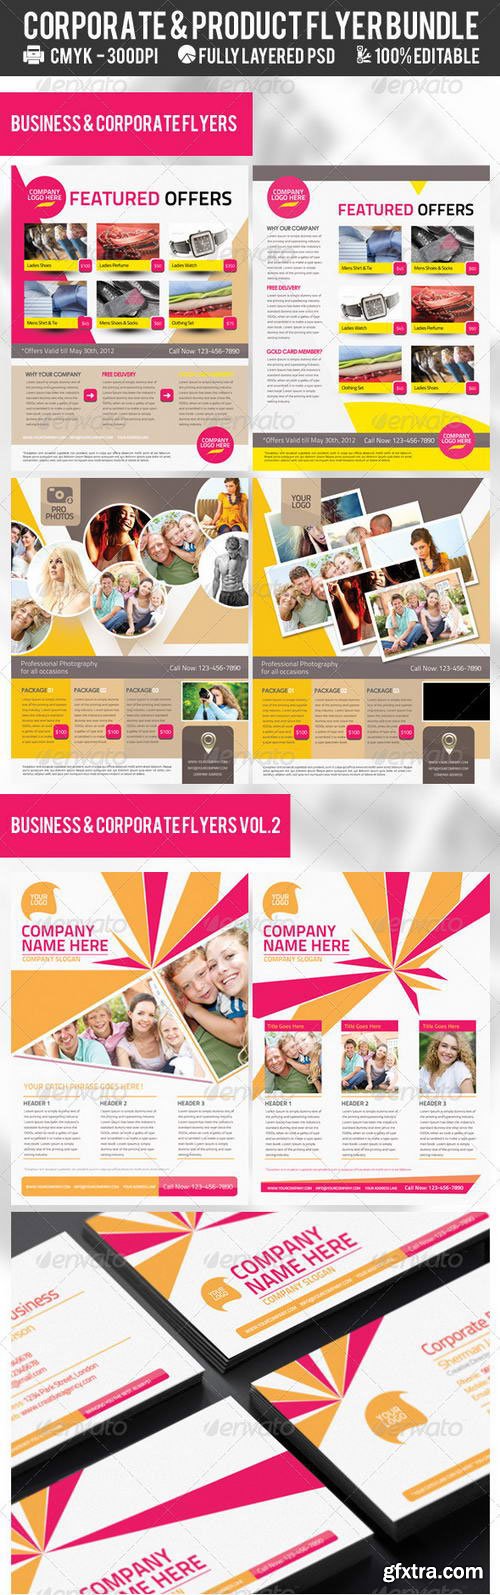 GraphicRiver - Corporate & Product Flyer Premium Bundle